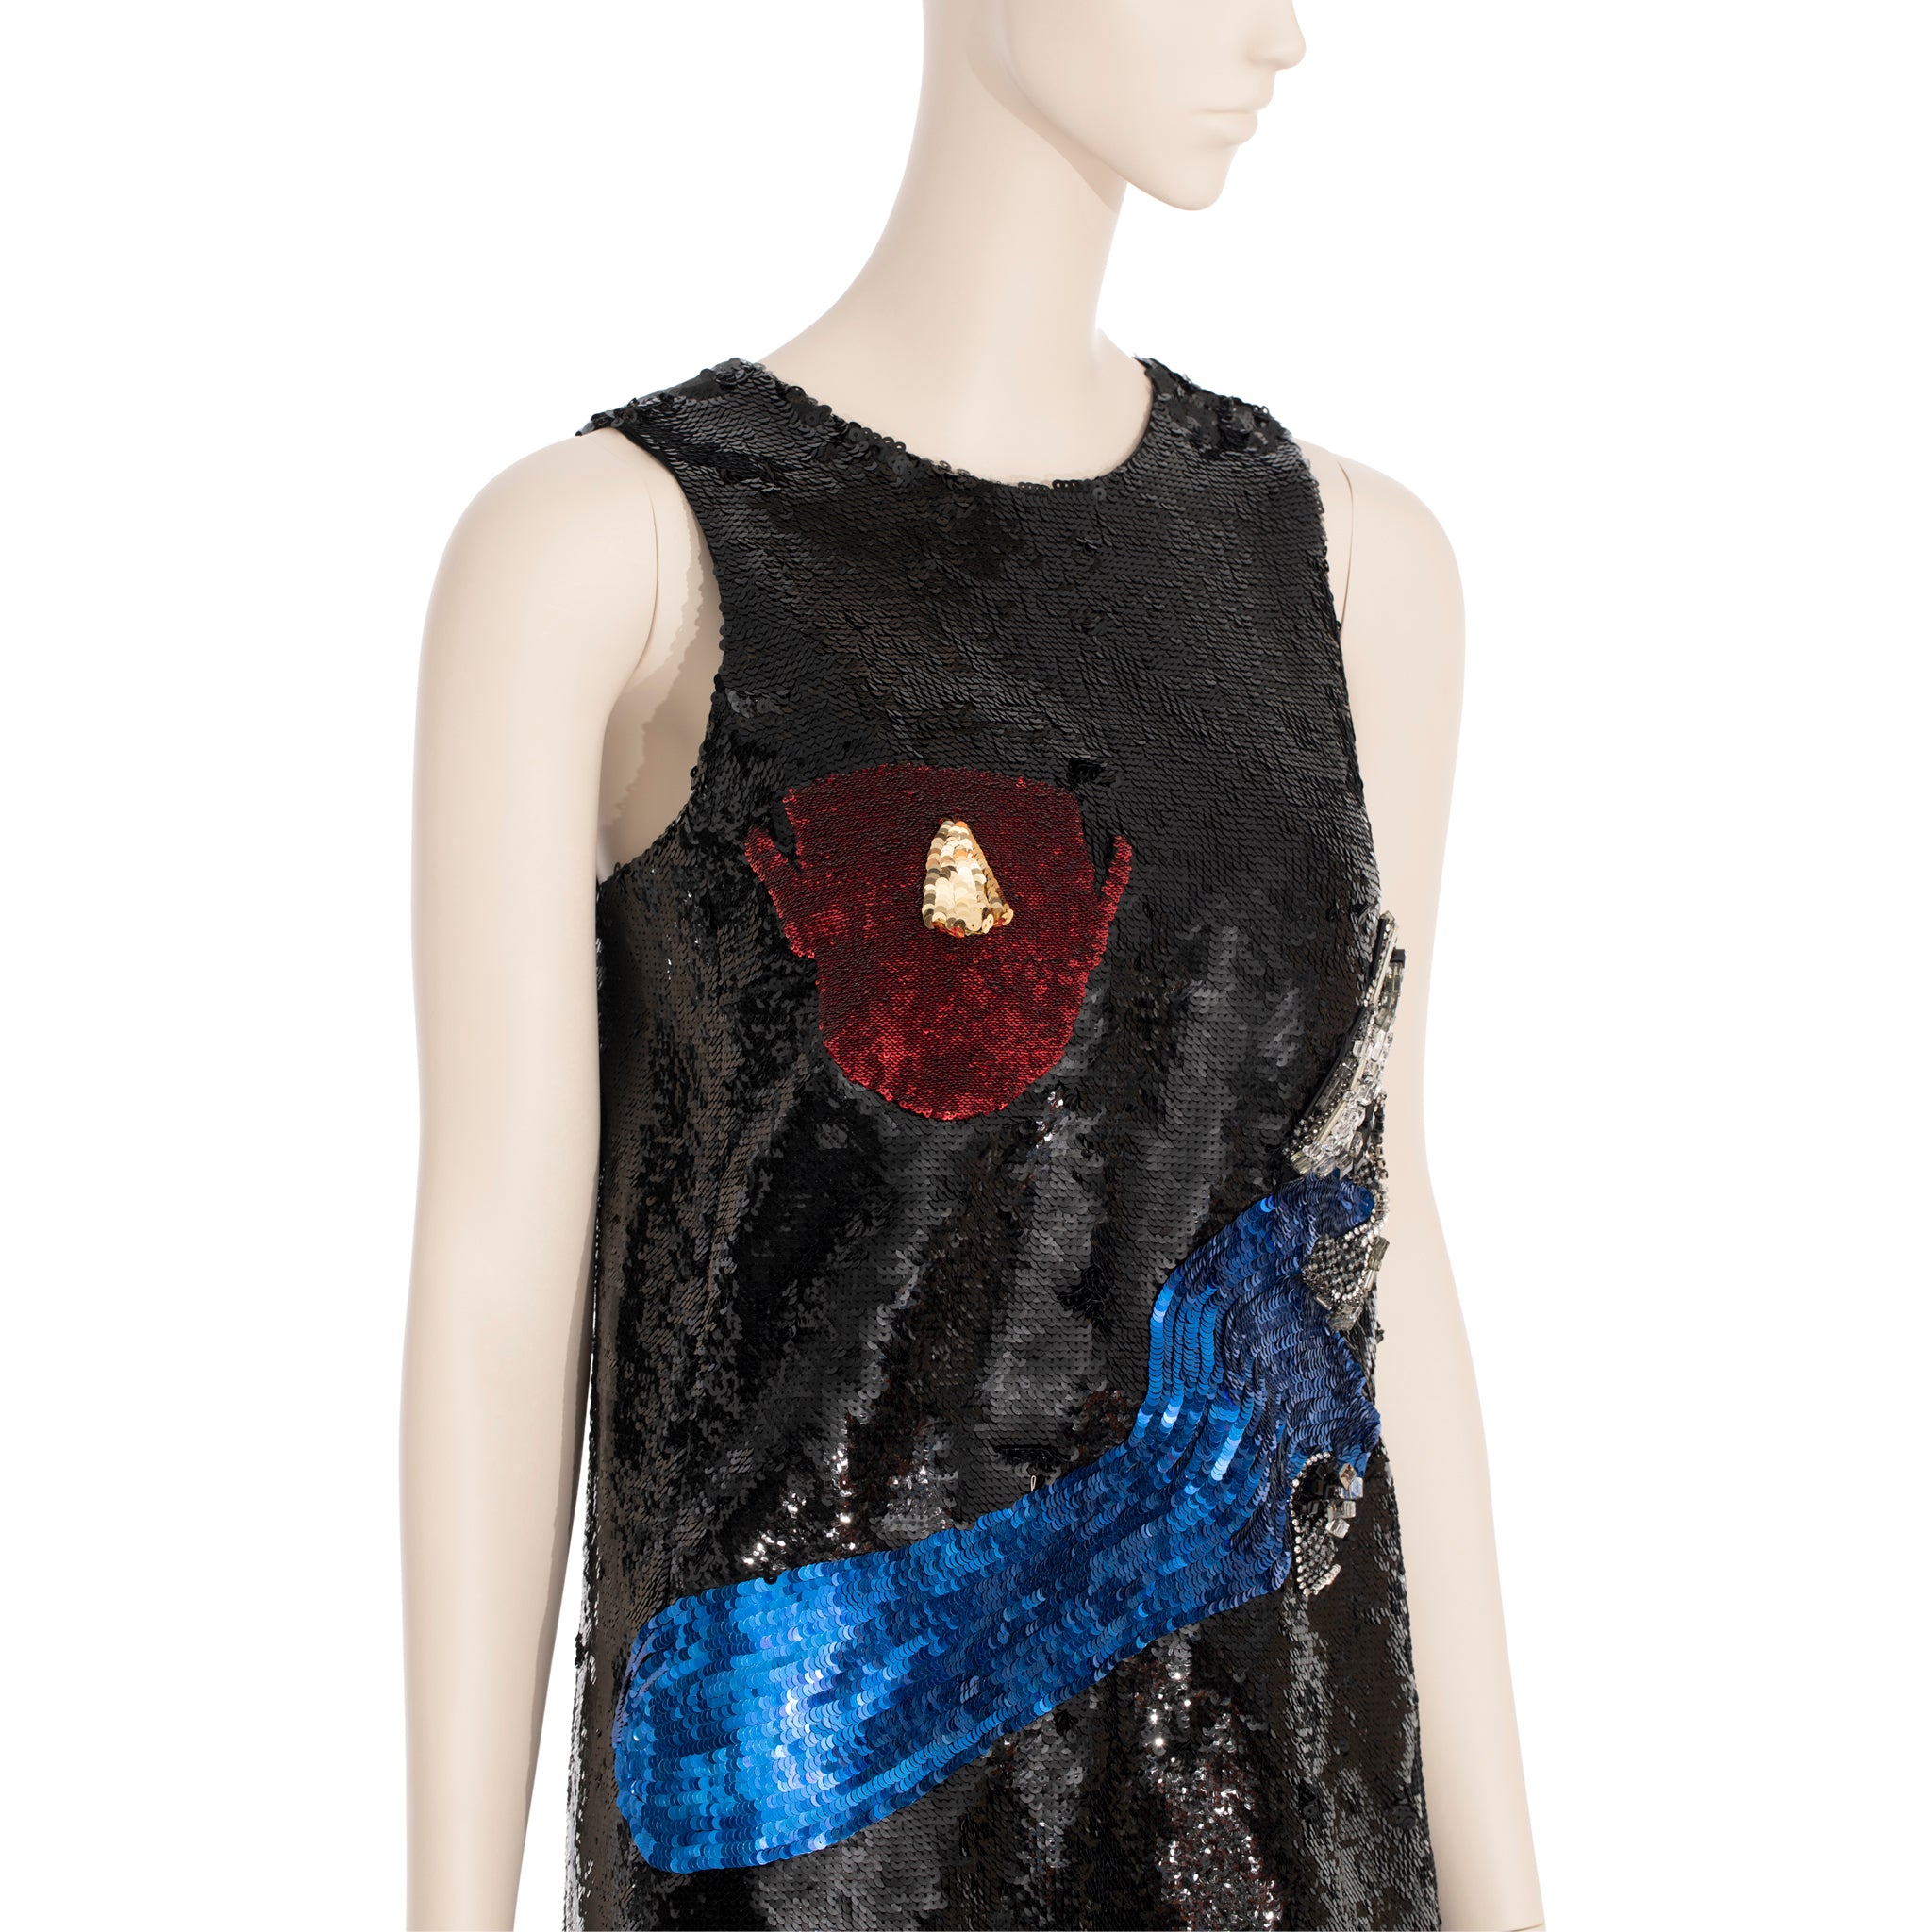 Saint Laurent X John Baldessari by Hedi Slimane Sequin Mini Dress Look #13